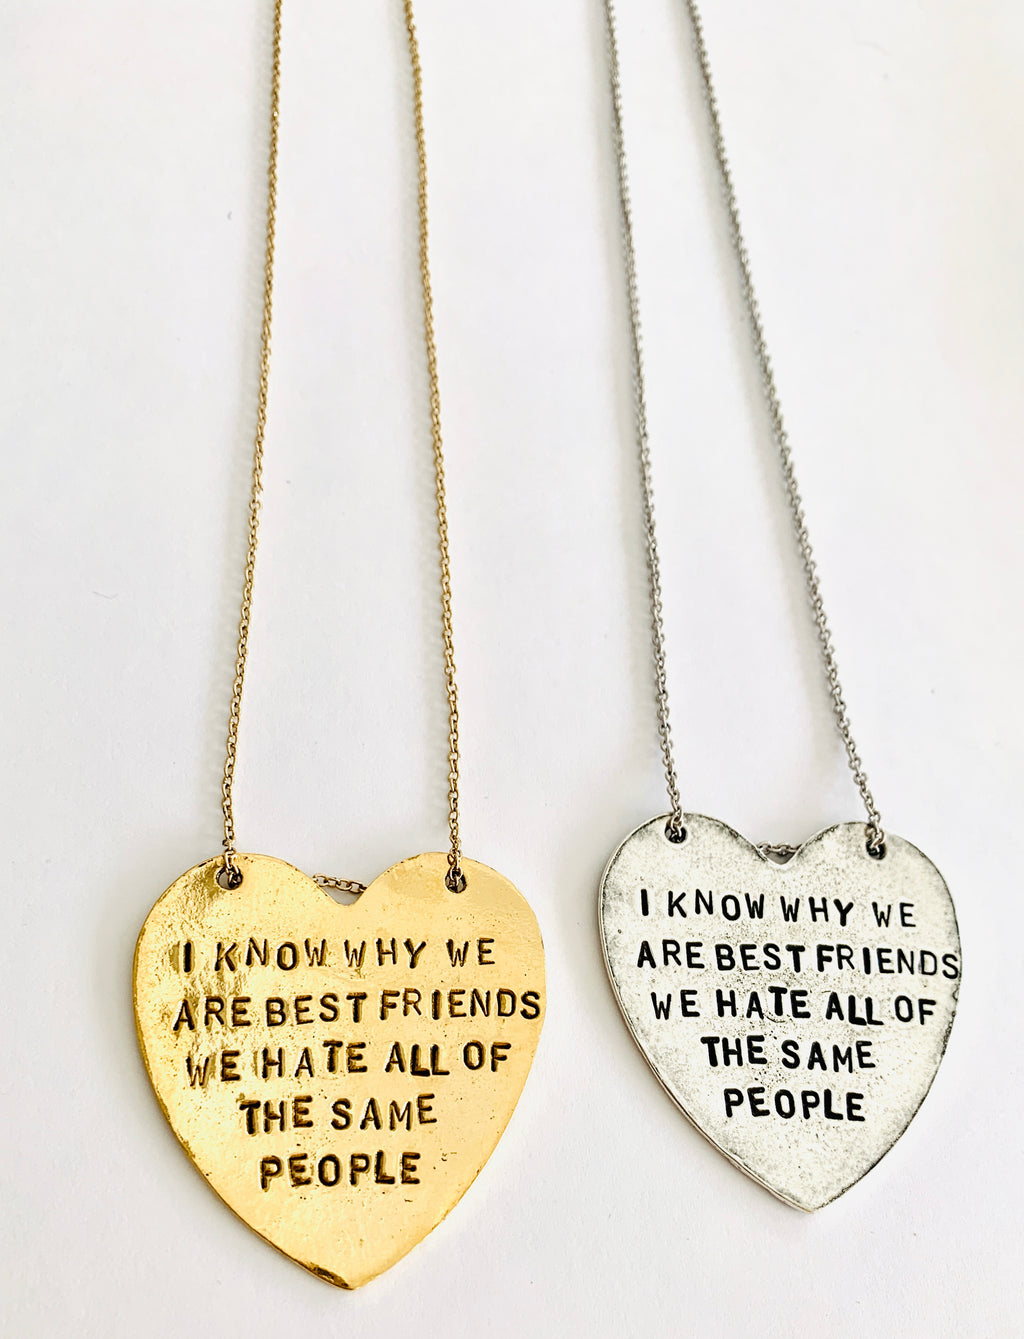 Buy ODETOJOY Best Friends Necklace for 2 BFF Broken Heart Necklace  Rhinestone Bestfriends Engraved Letters Pendant, Metal at Amazon.in